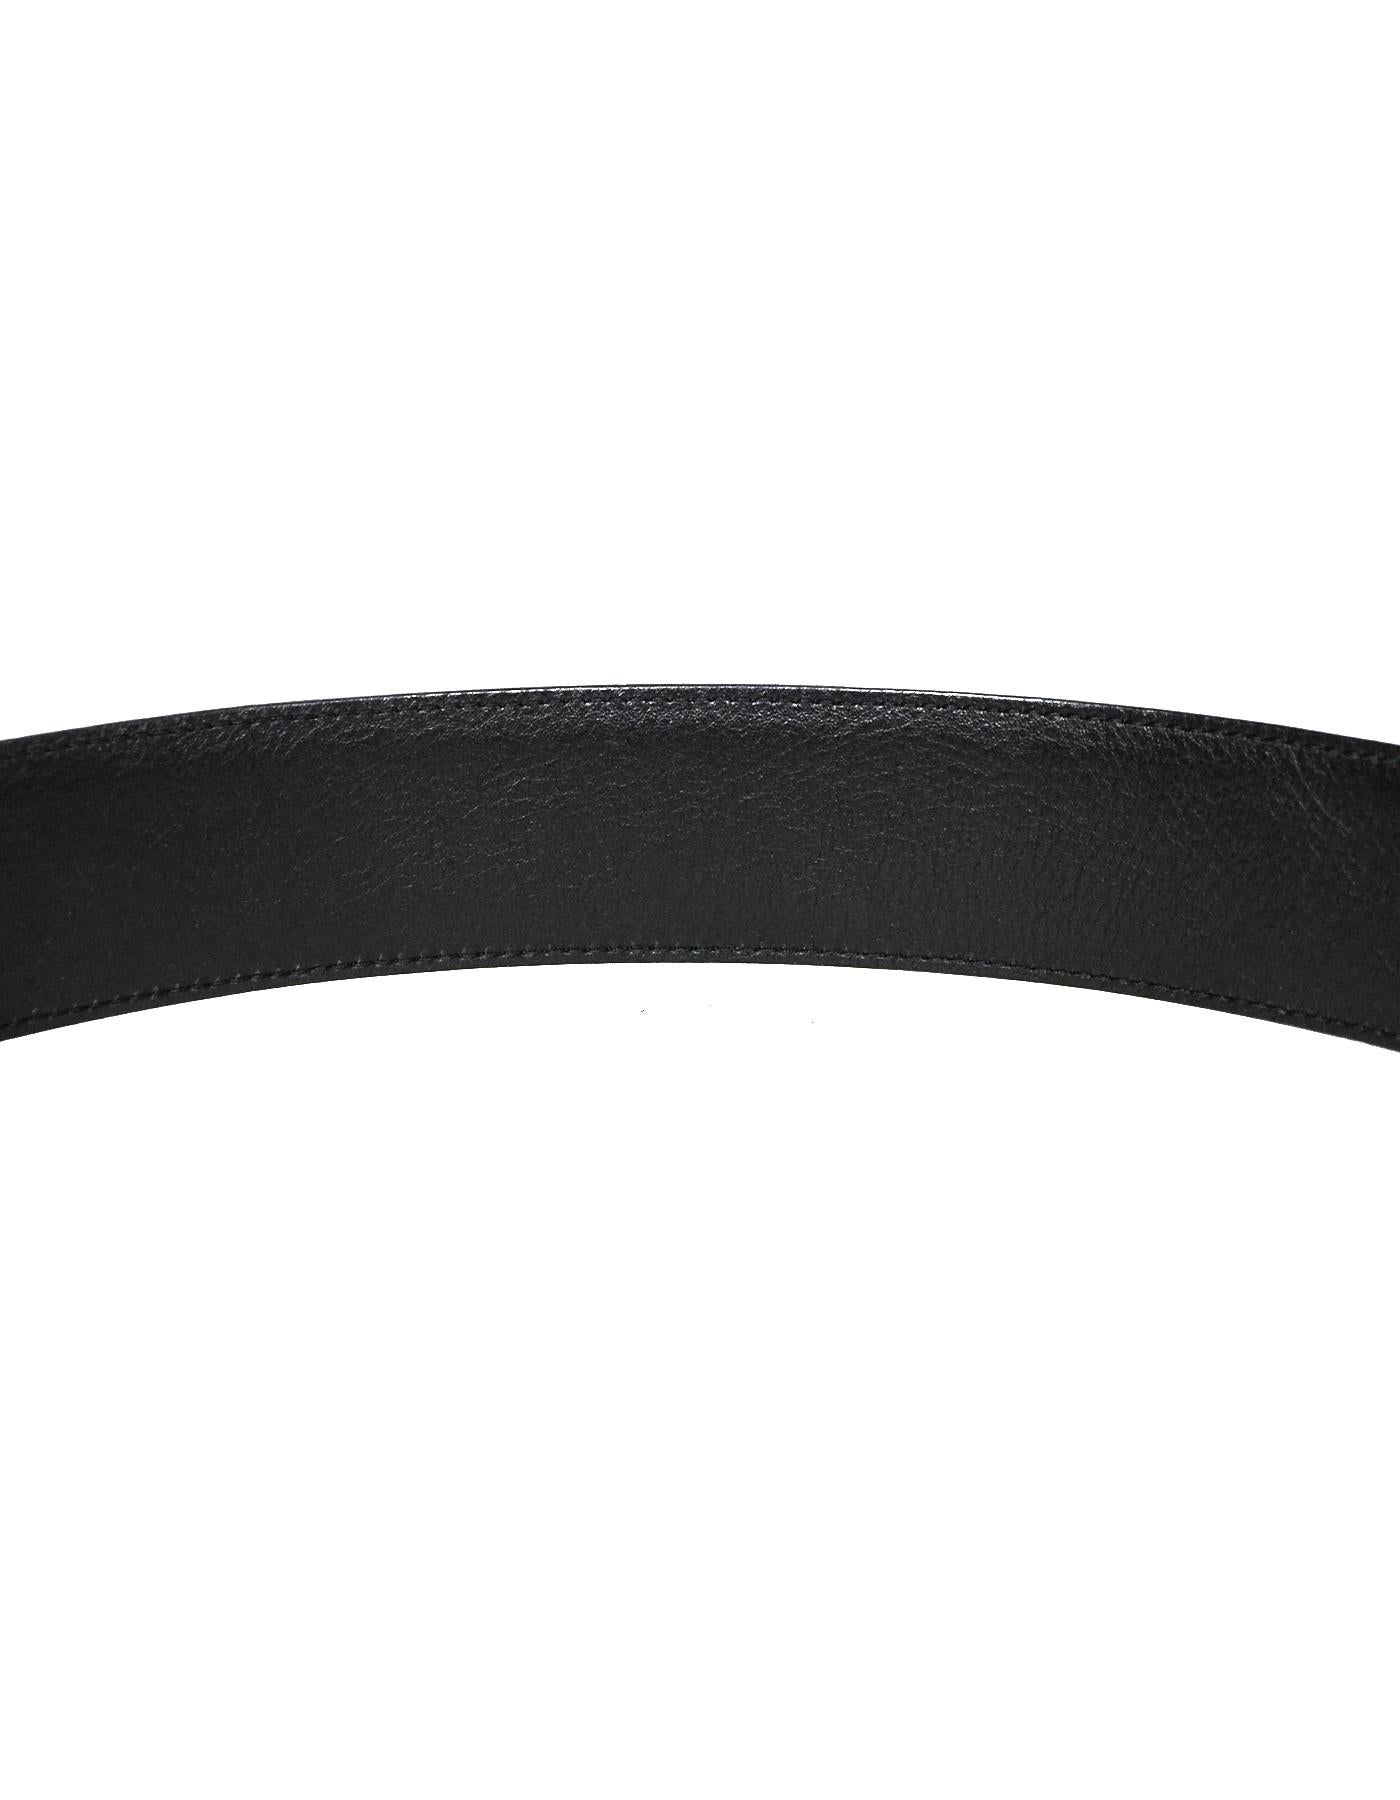 Women's Ferragamo Black Patent Leather Vera Bow Belt sz 27